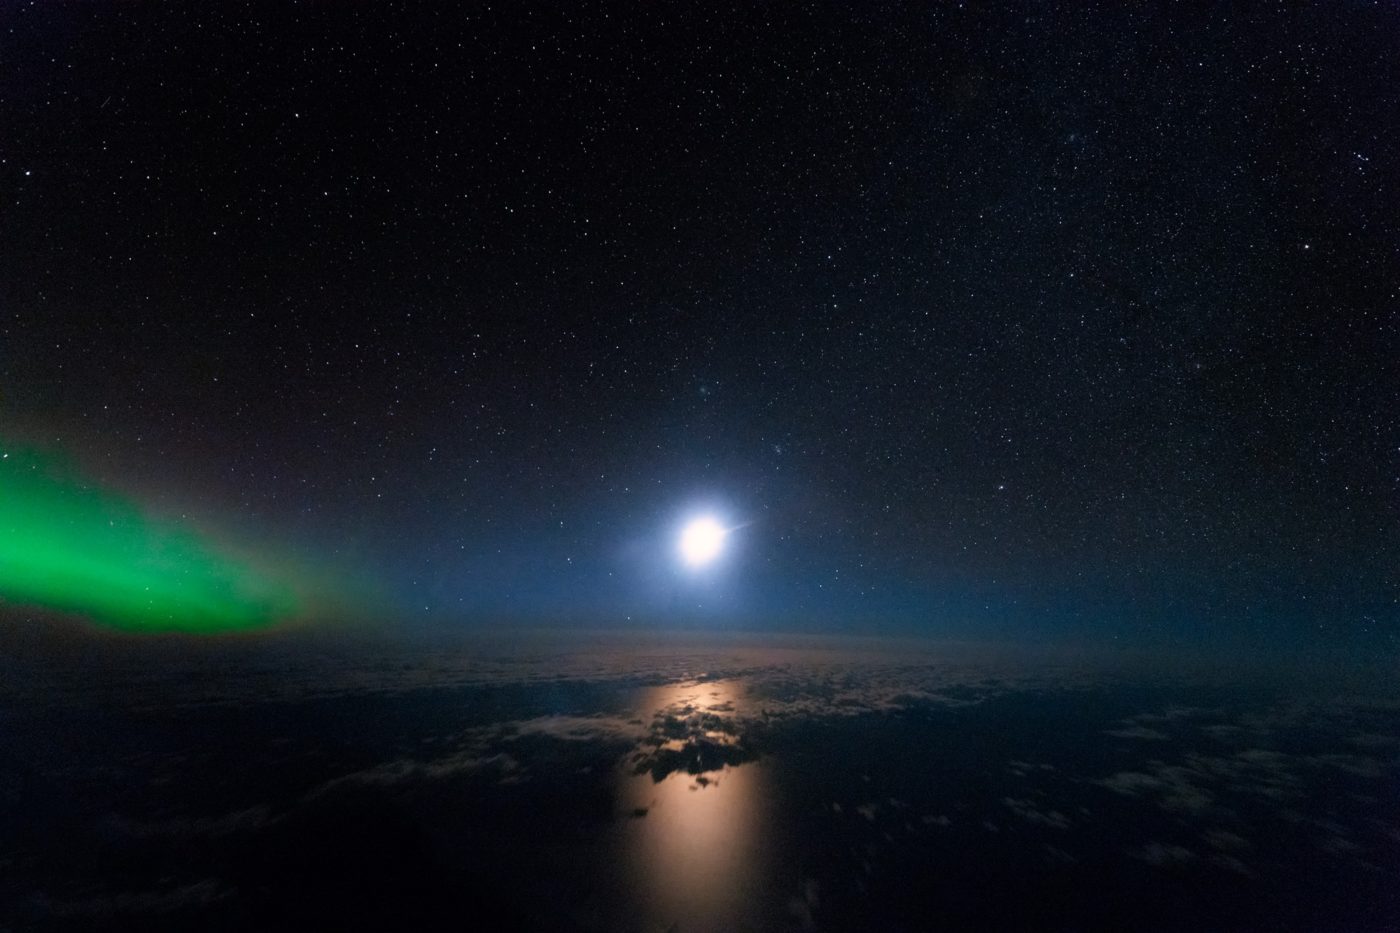 Moonlight above the Clouds by Christiaan Van Heijst